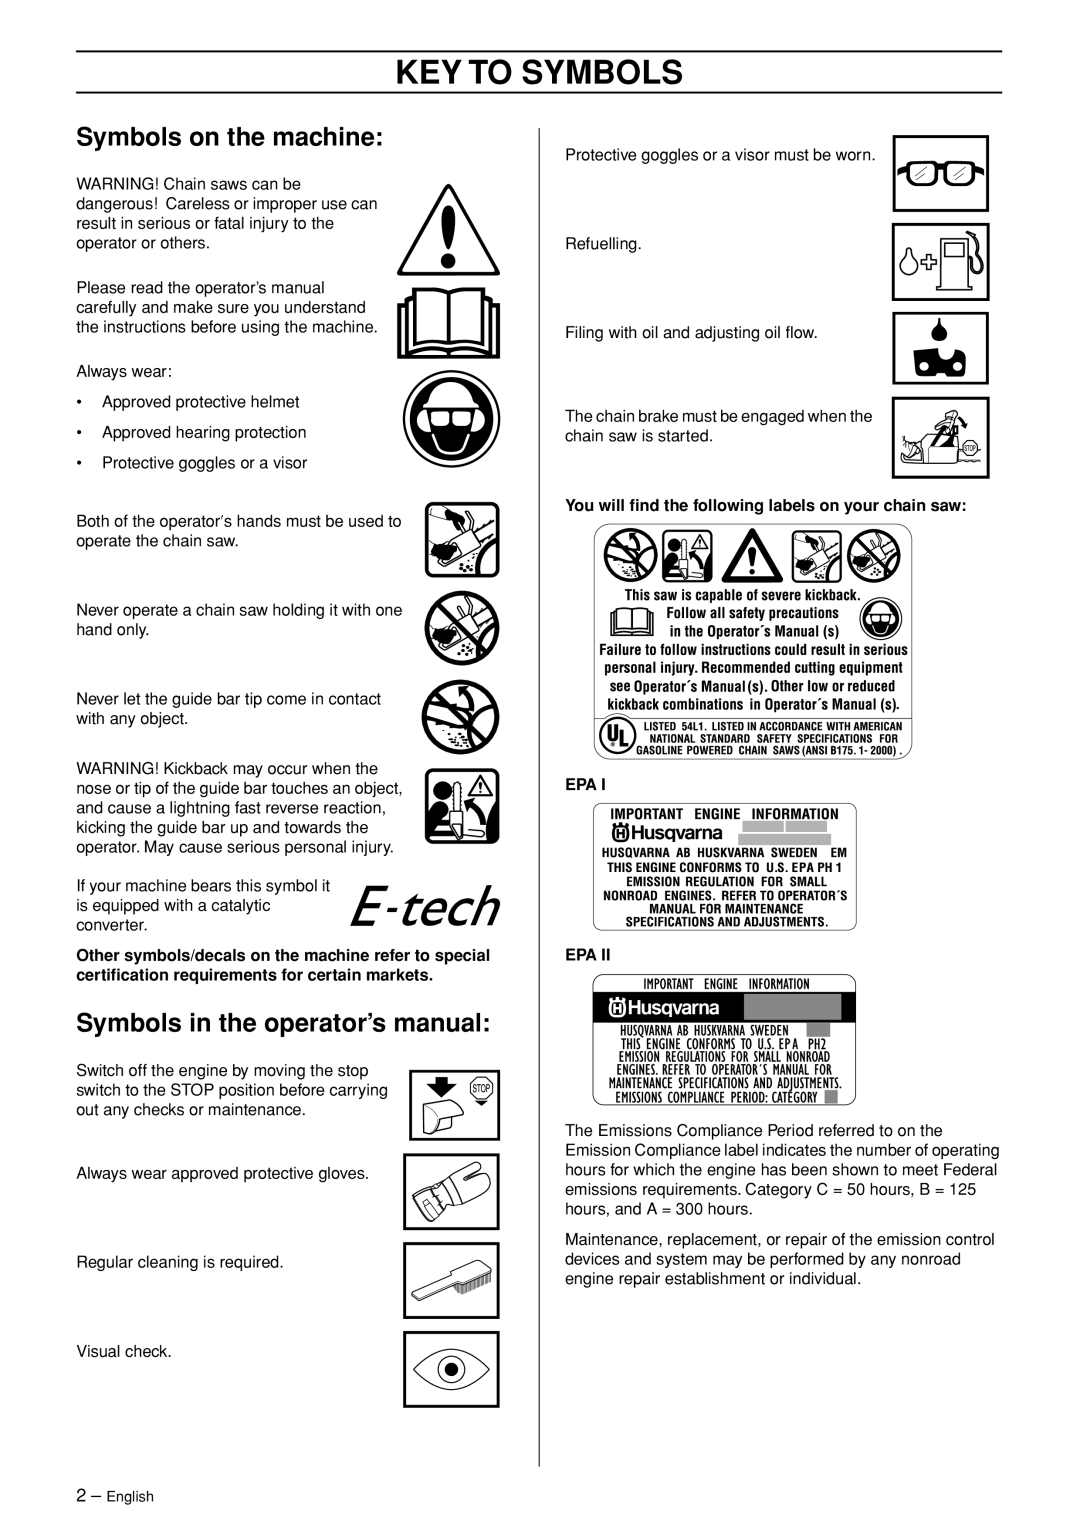 Husqvarna 346XP EPA II Key To Symbols, Symbols on the machine, Symbols in the operator’s manual 